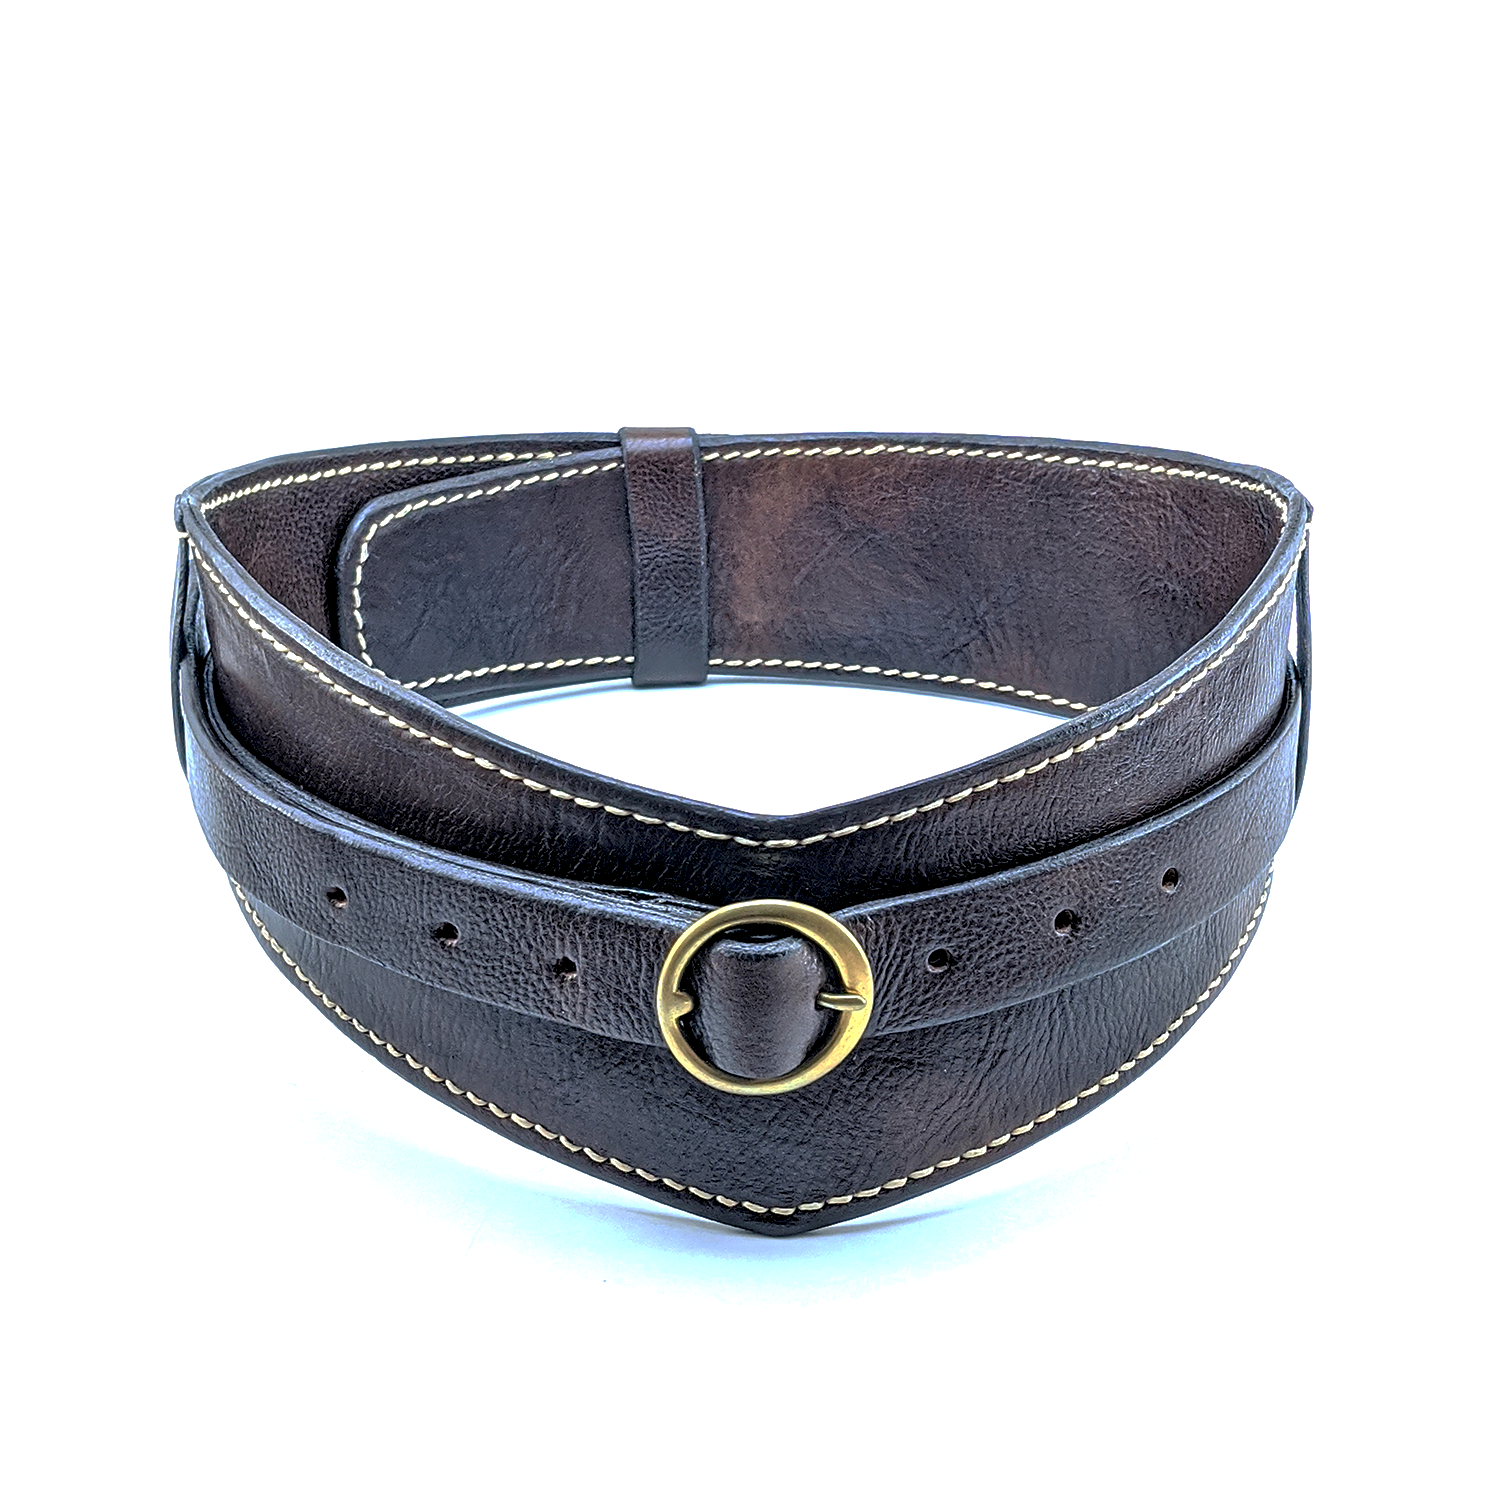 wide leather wrap belt inspired by Cuthbert Aurelian Leathercraft